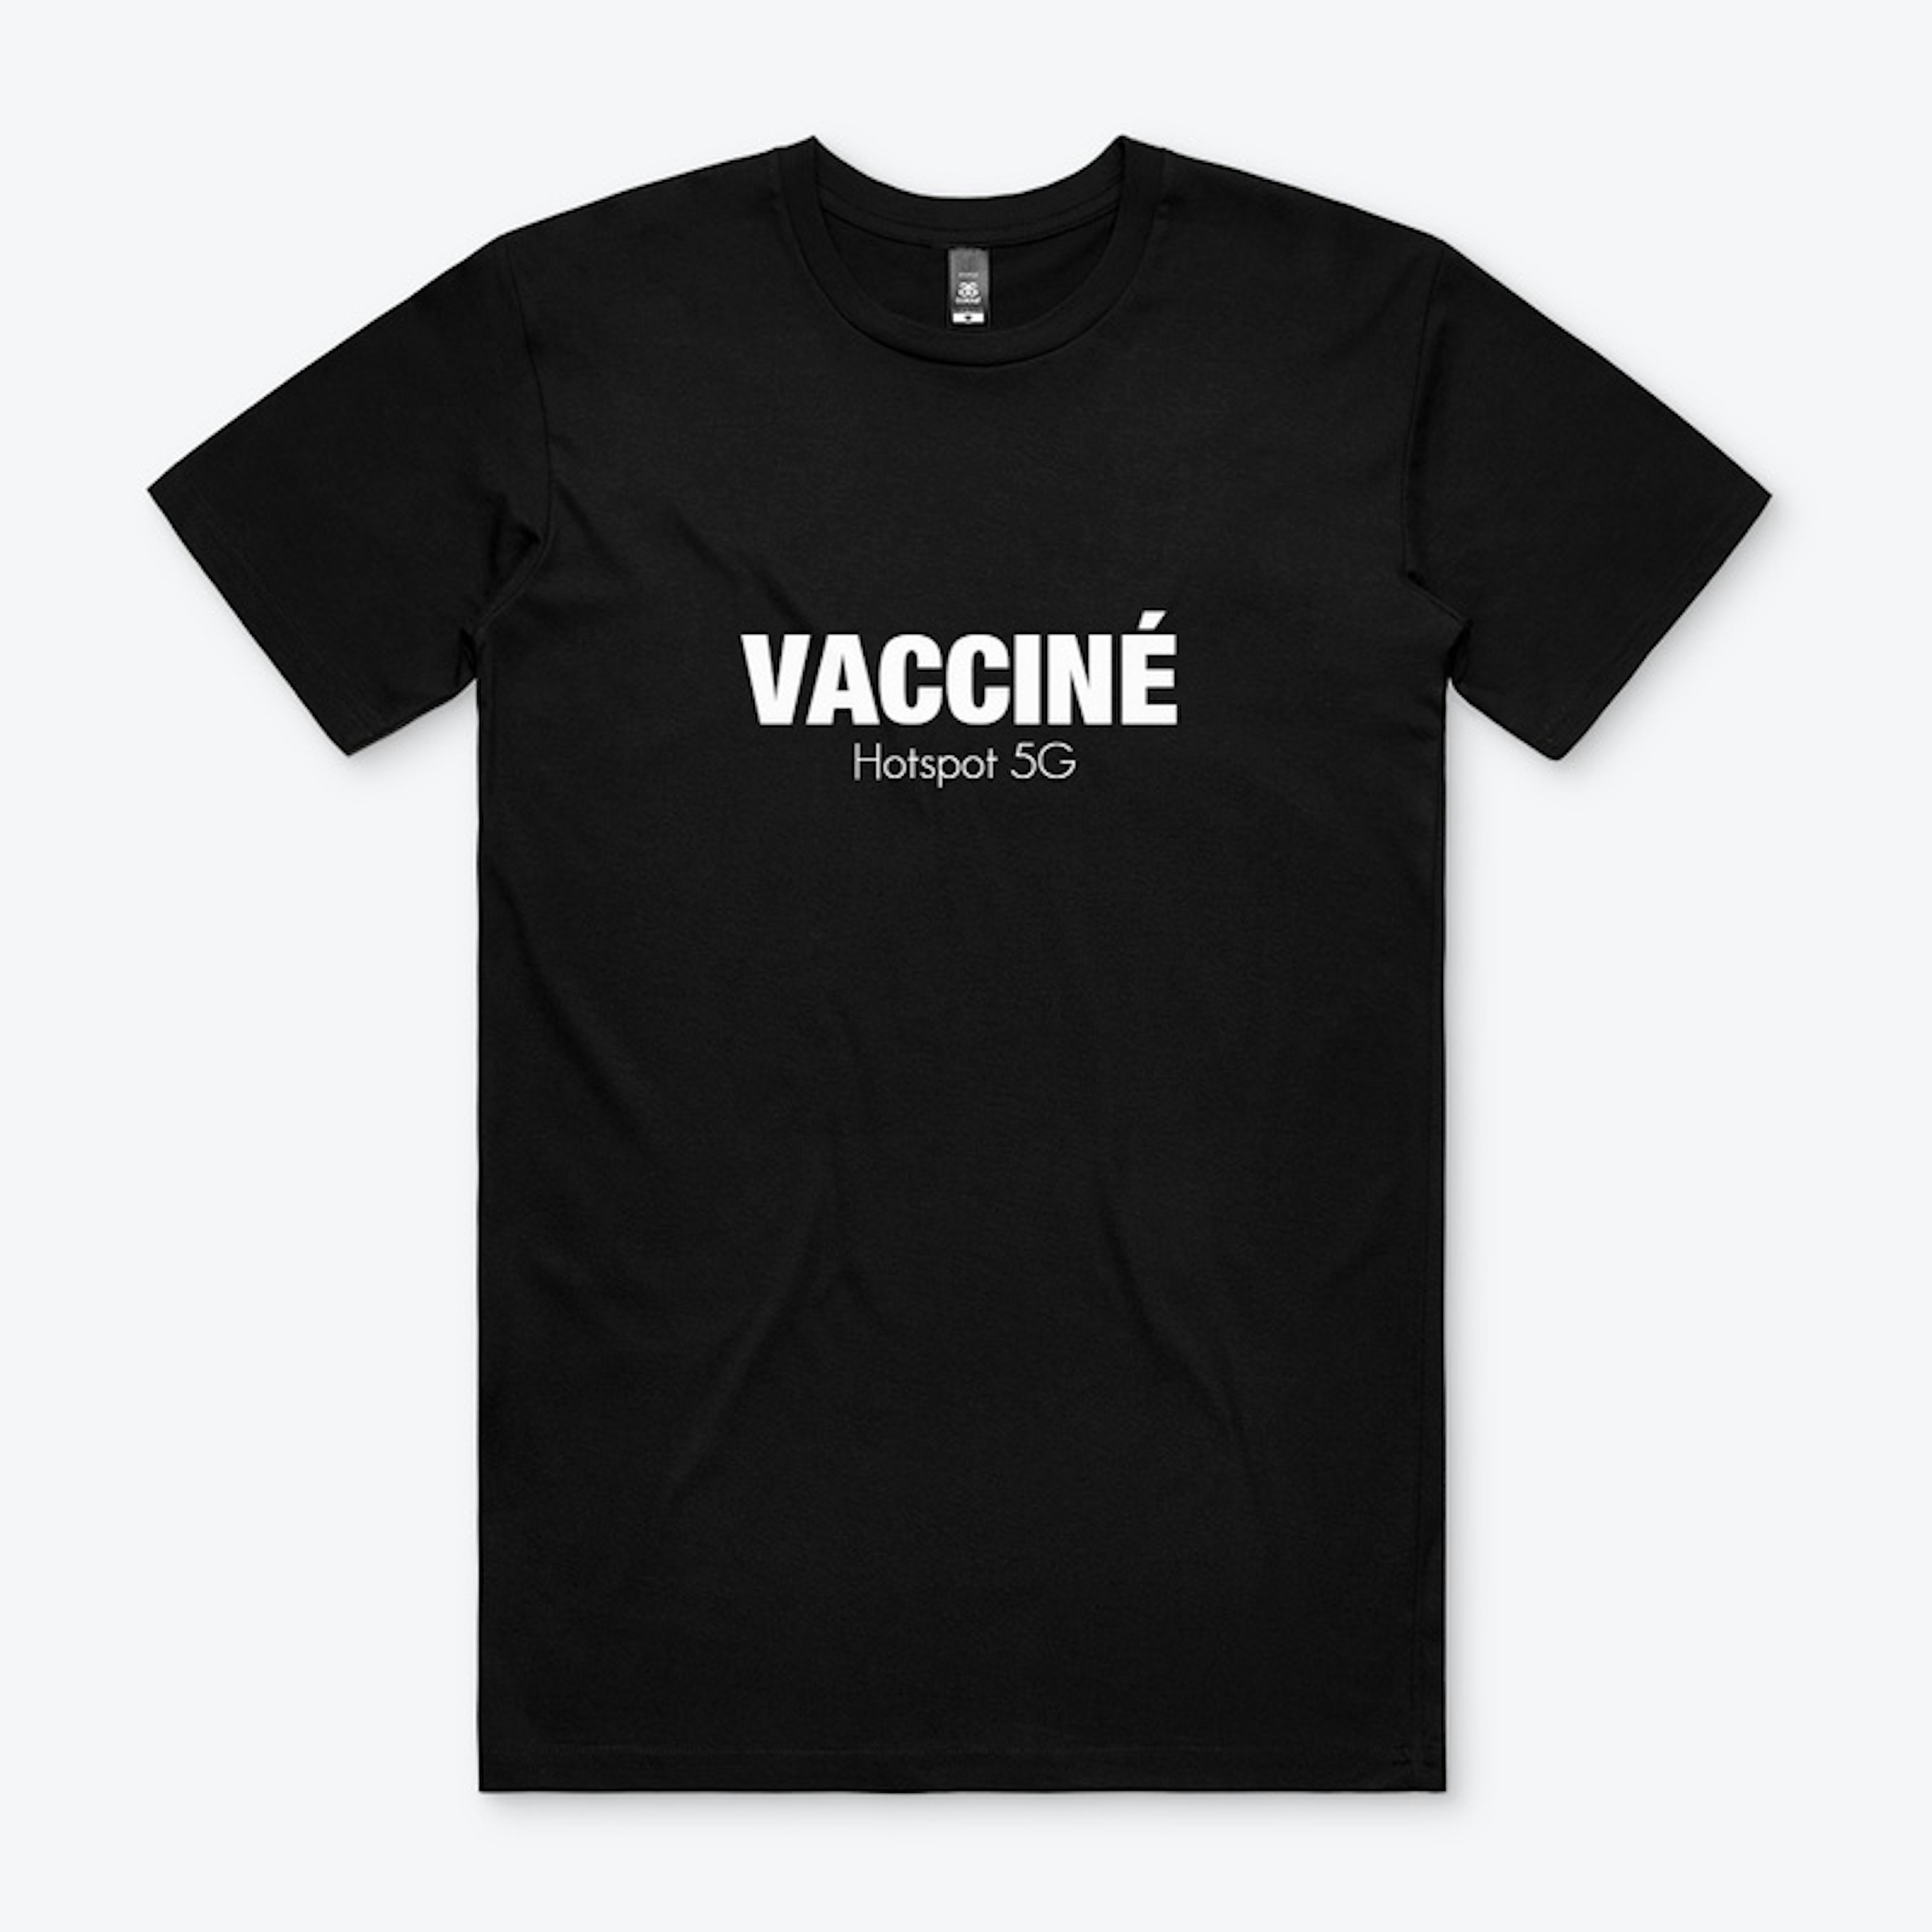 Vacciné - Hotspot 5G